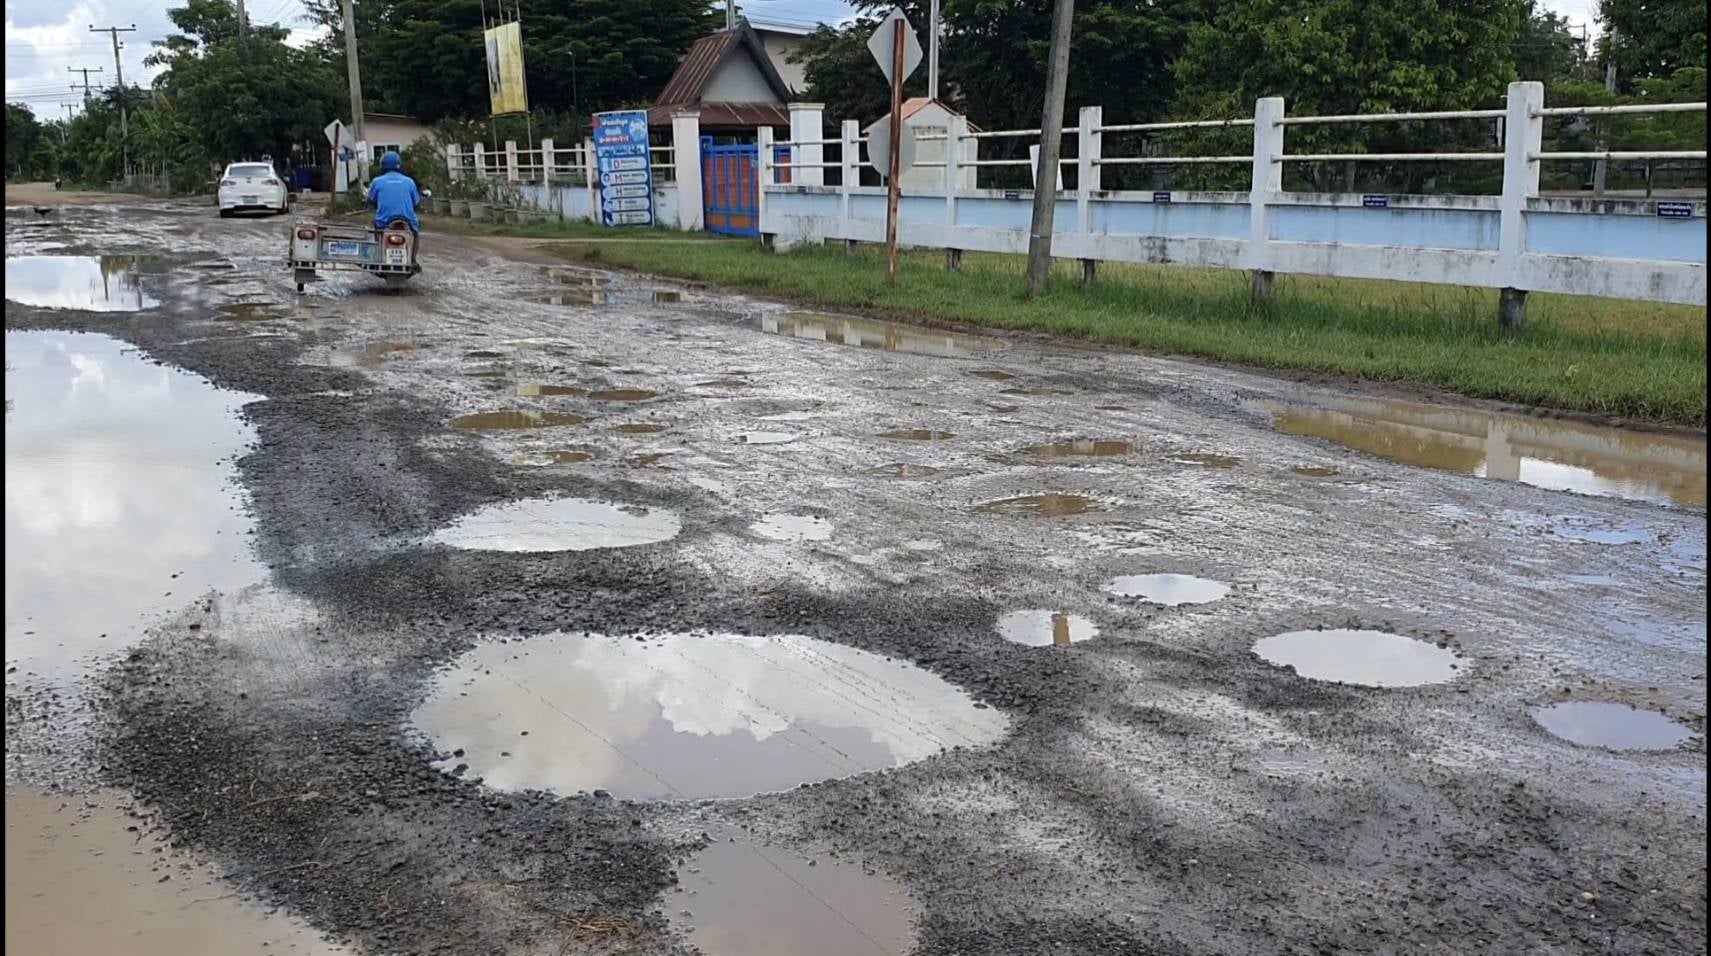 thai village potholes on road